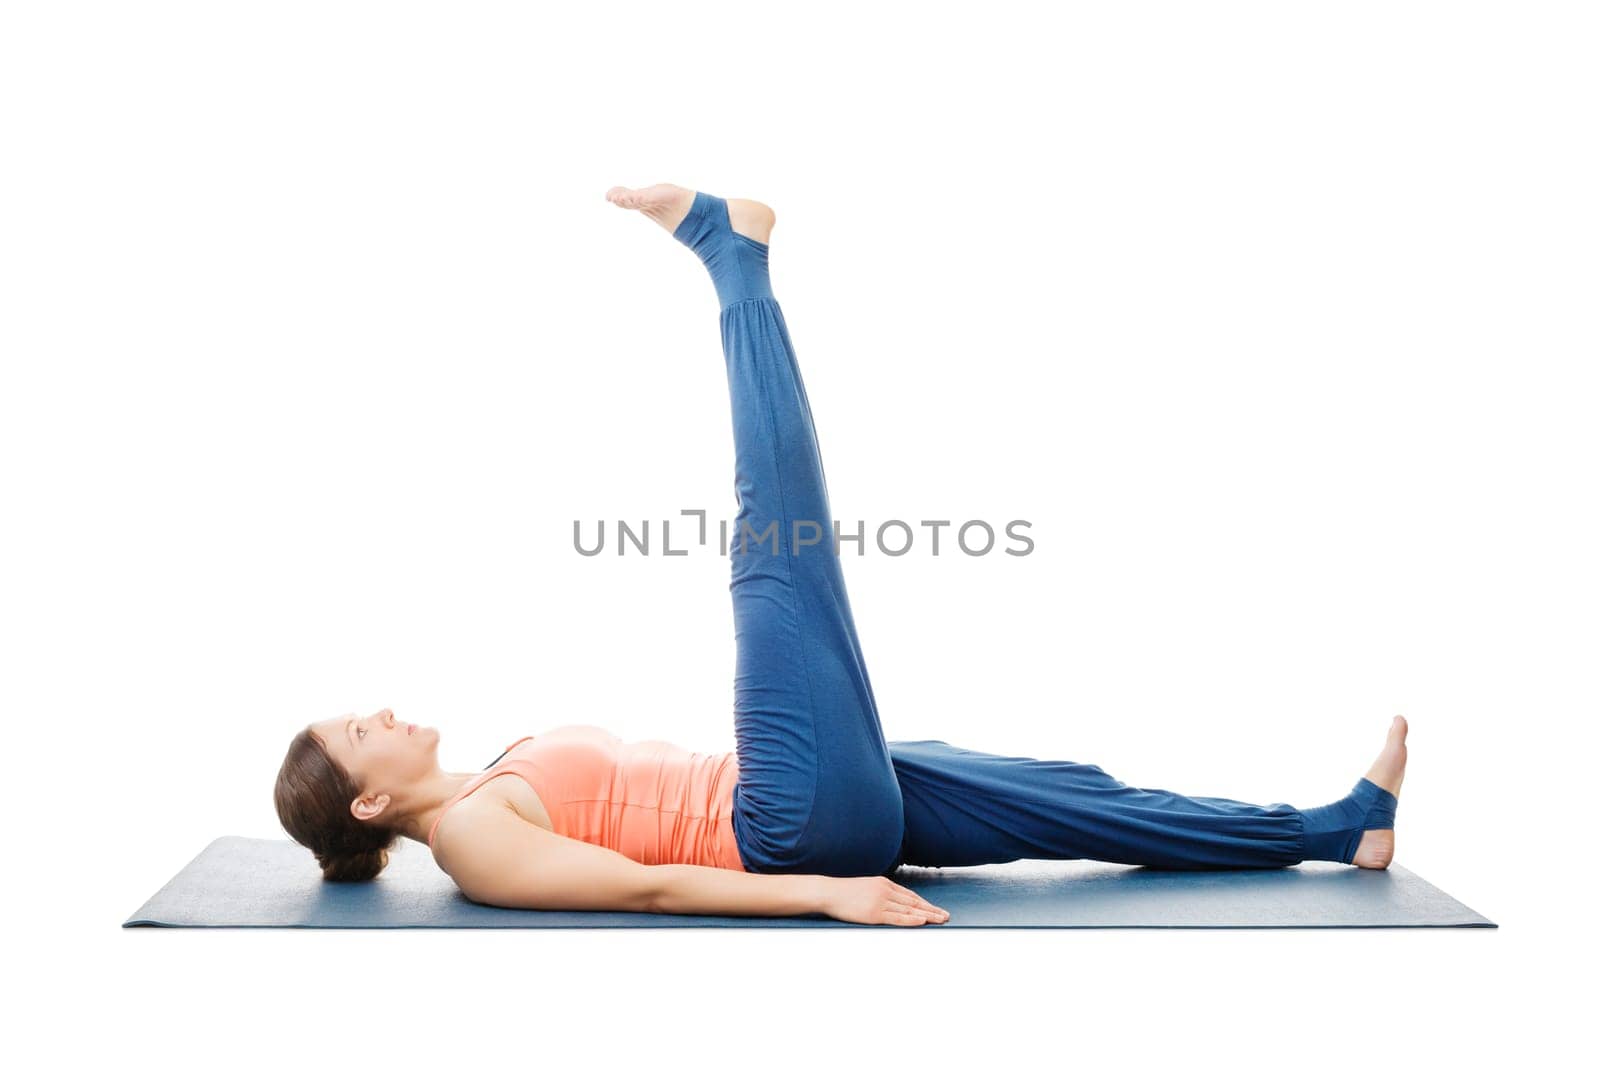 Woman doing yoga asana Uttanpadasana by dimol